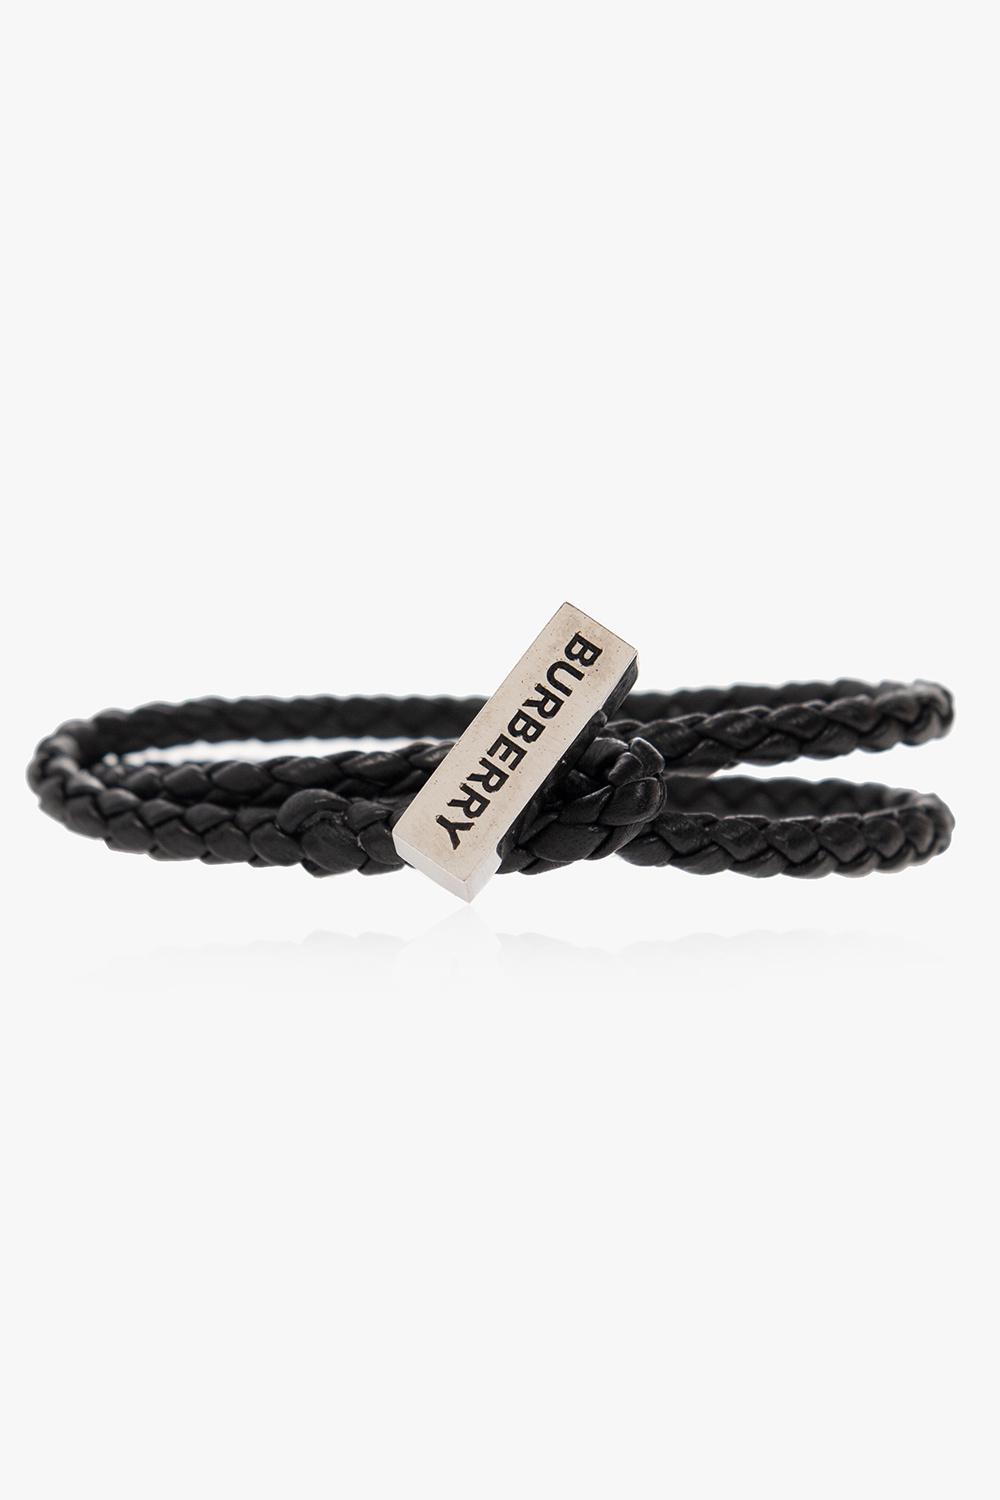 Burberry Leather bracelet